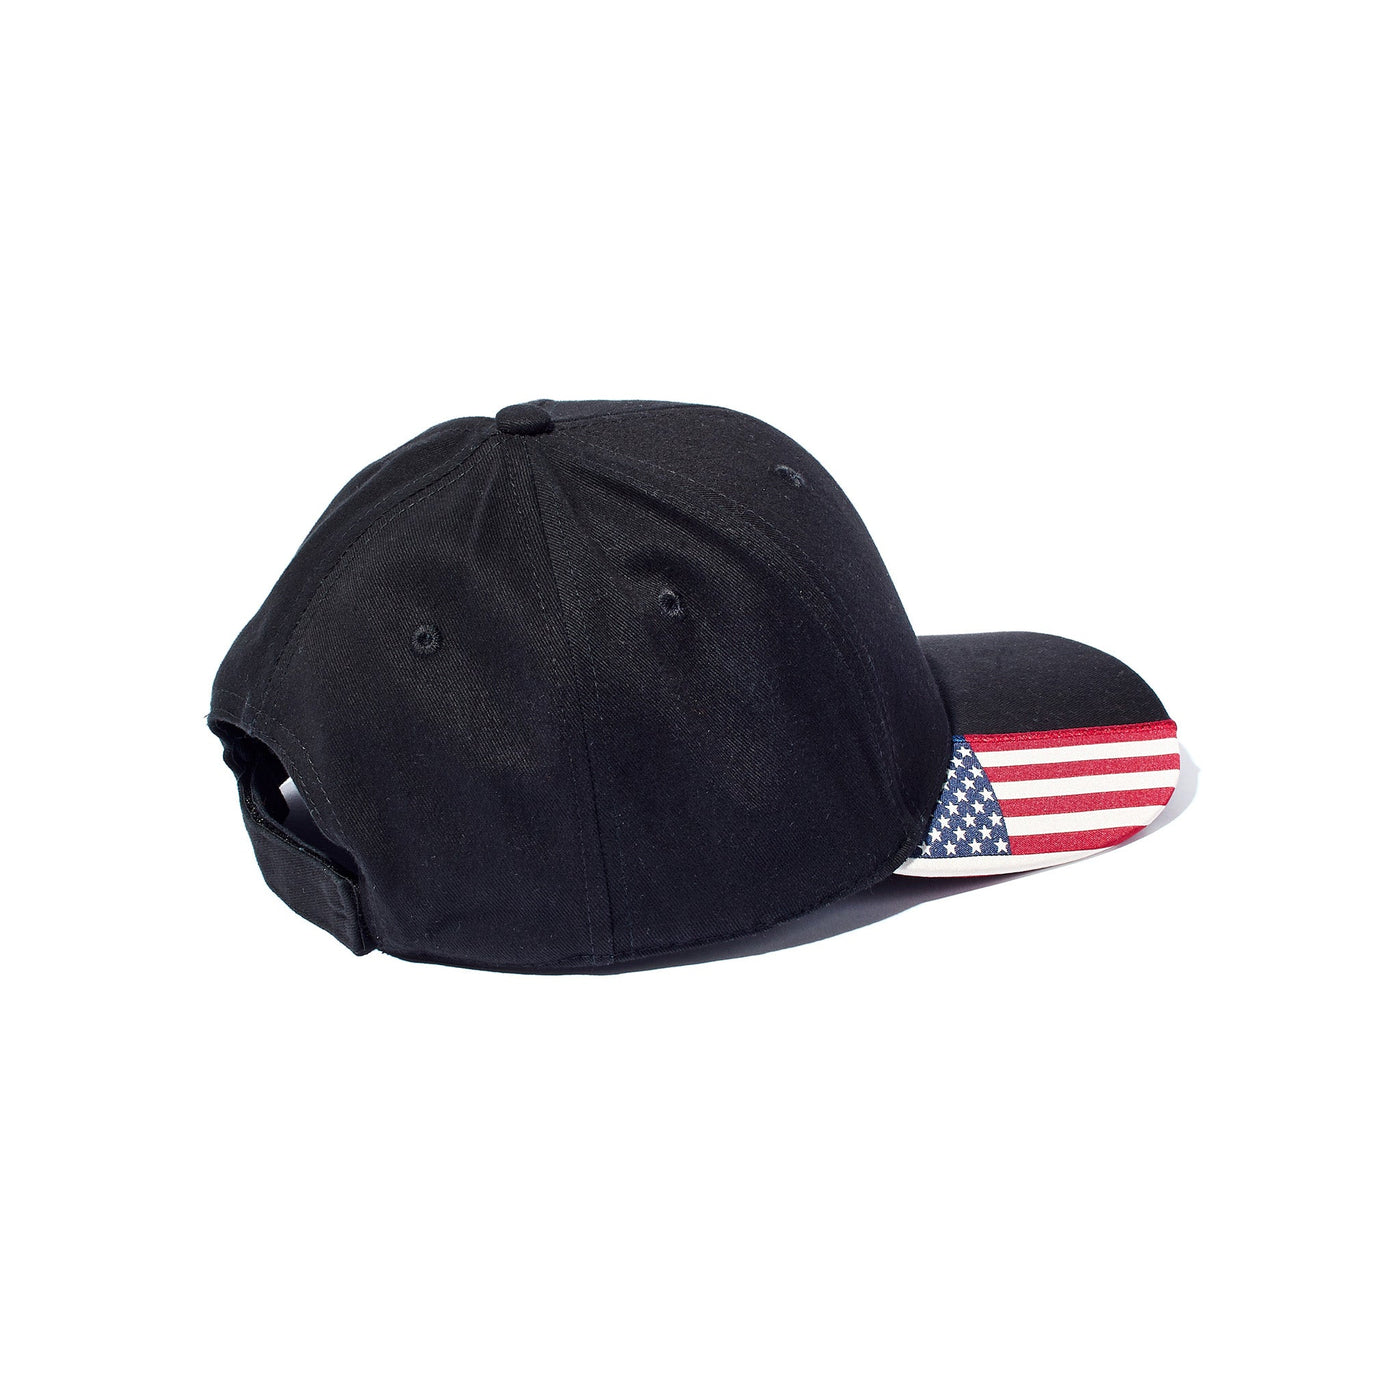 Flag Brim Cap - Black - Carry The Load Shop